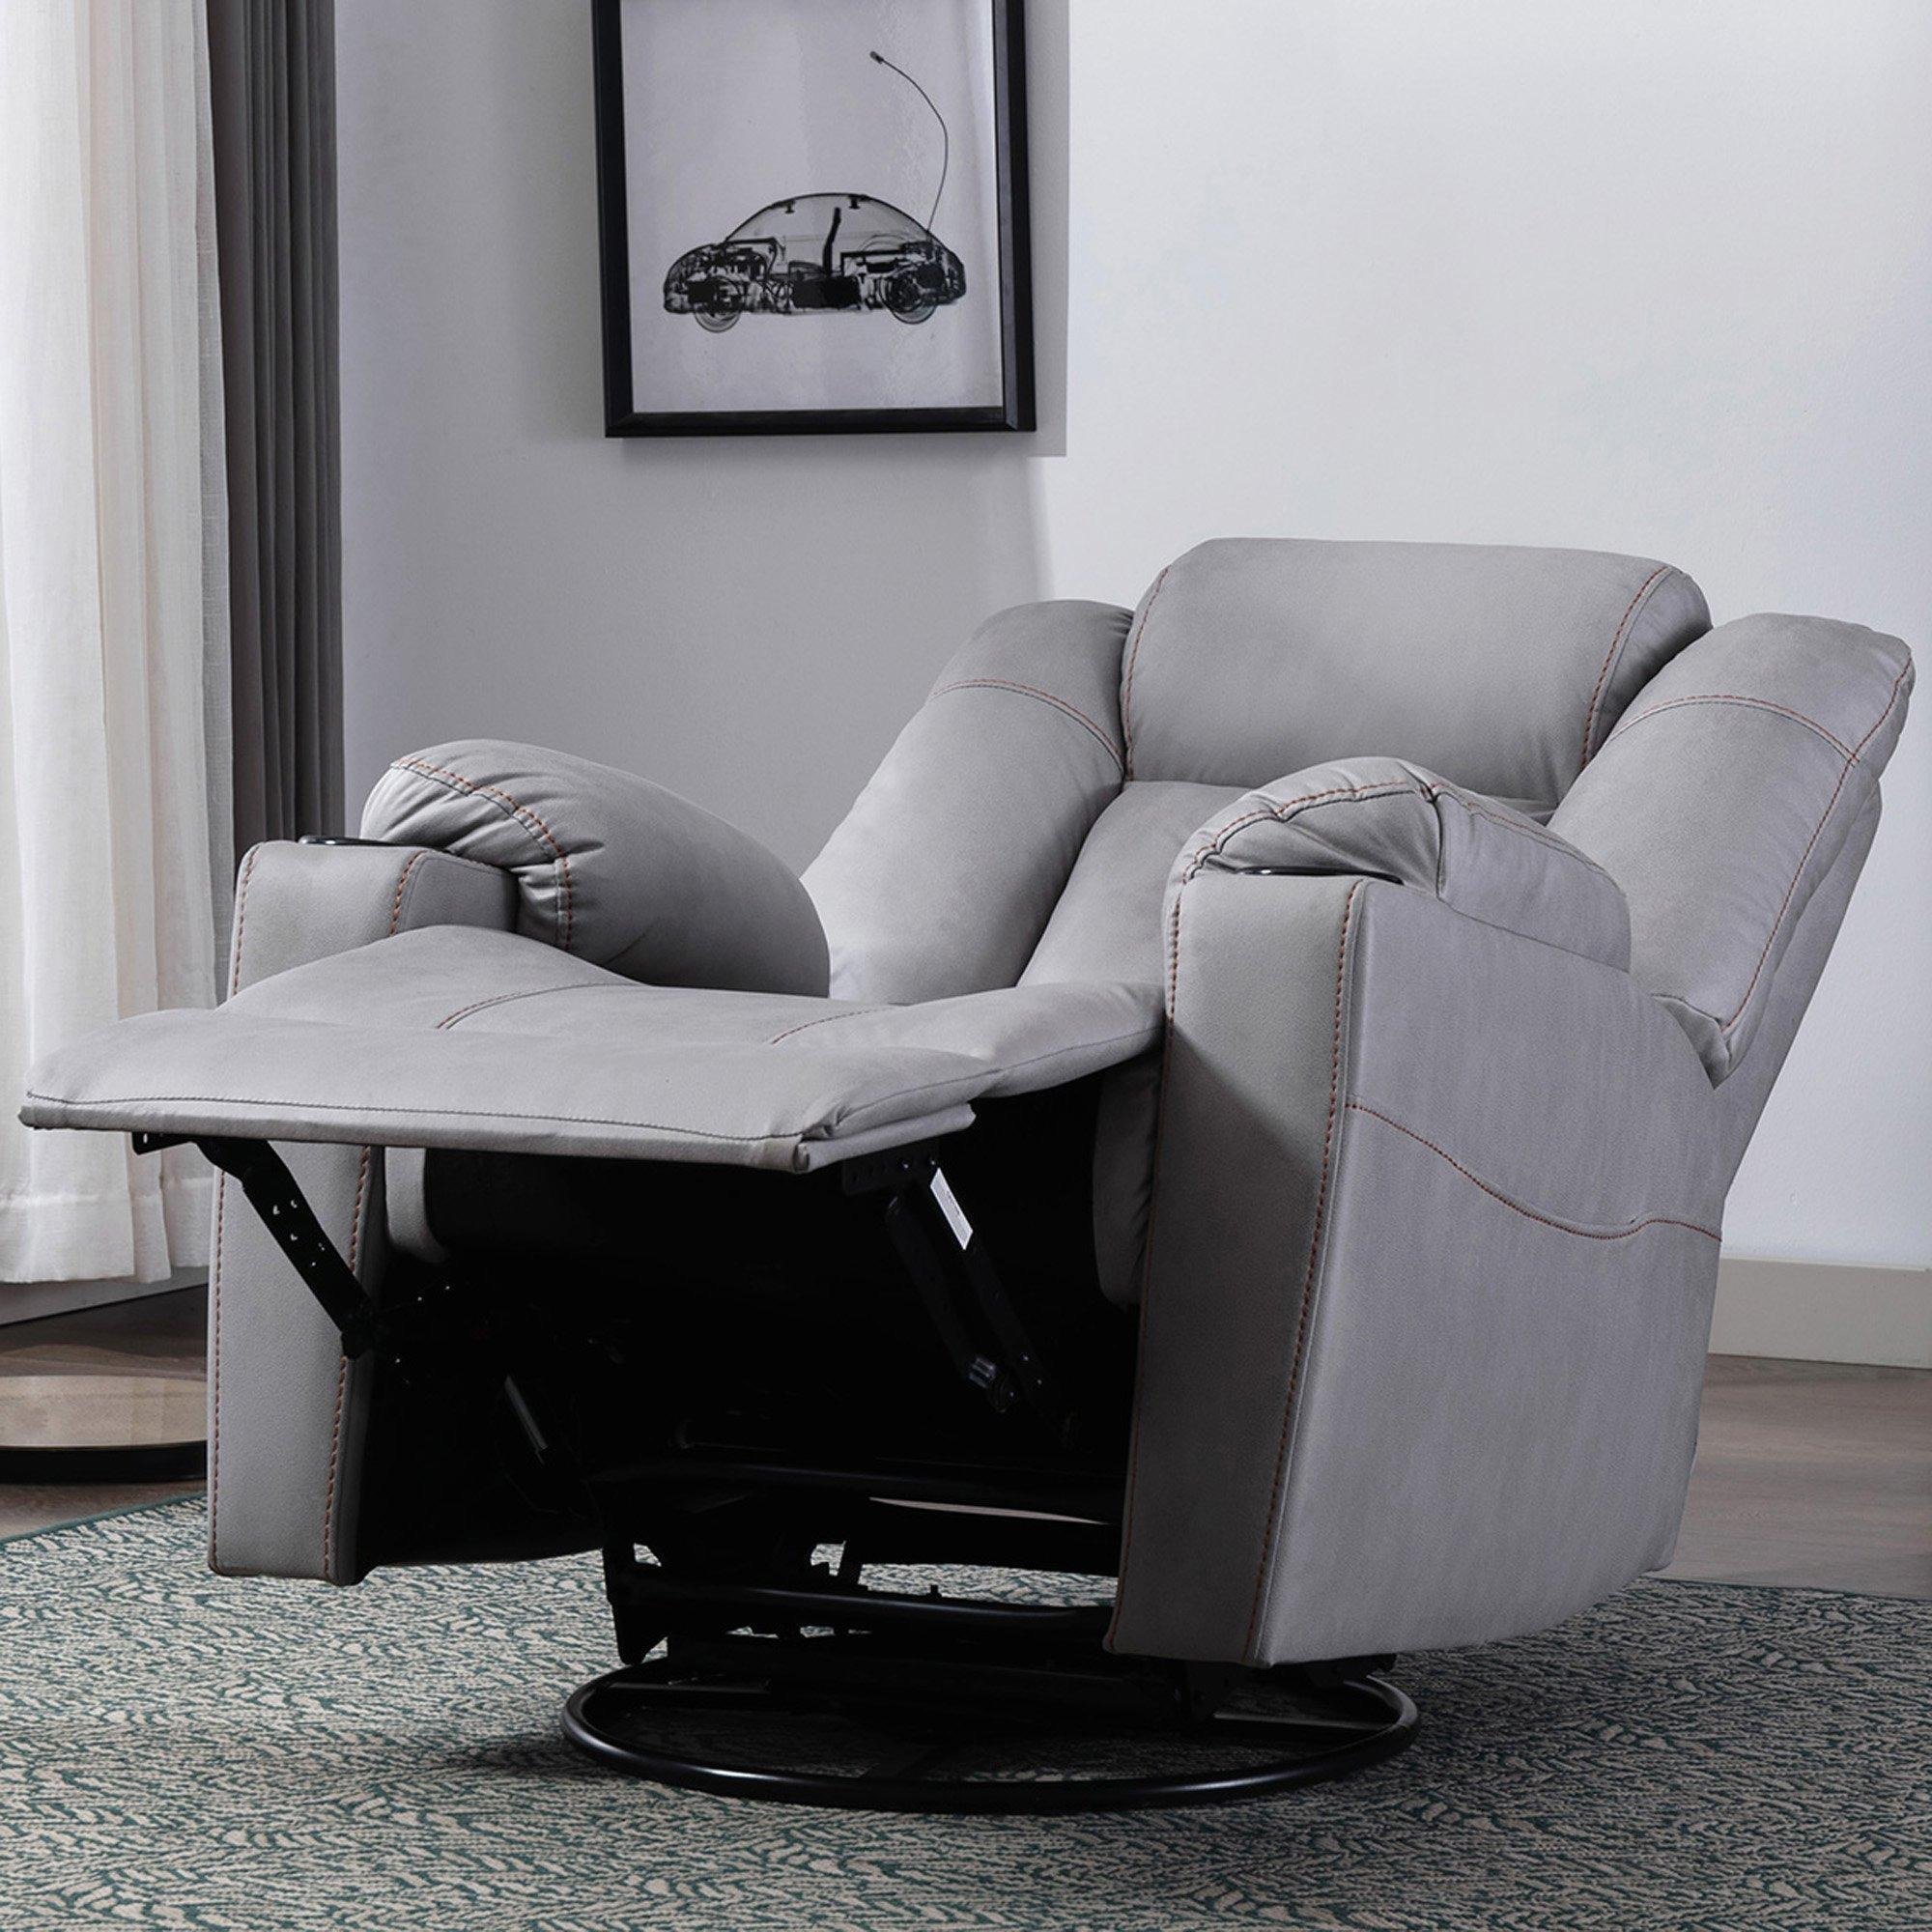 Afton Technology Fabric Recliner Rocking Swivel Cinema Sofa Chair - image 1